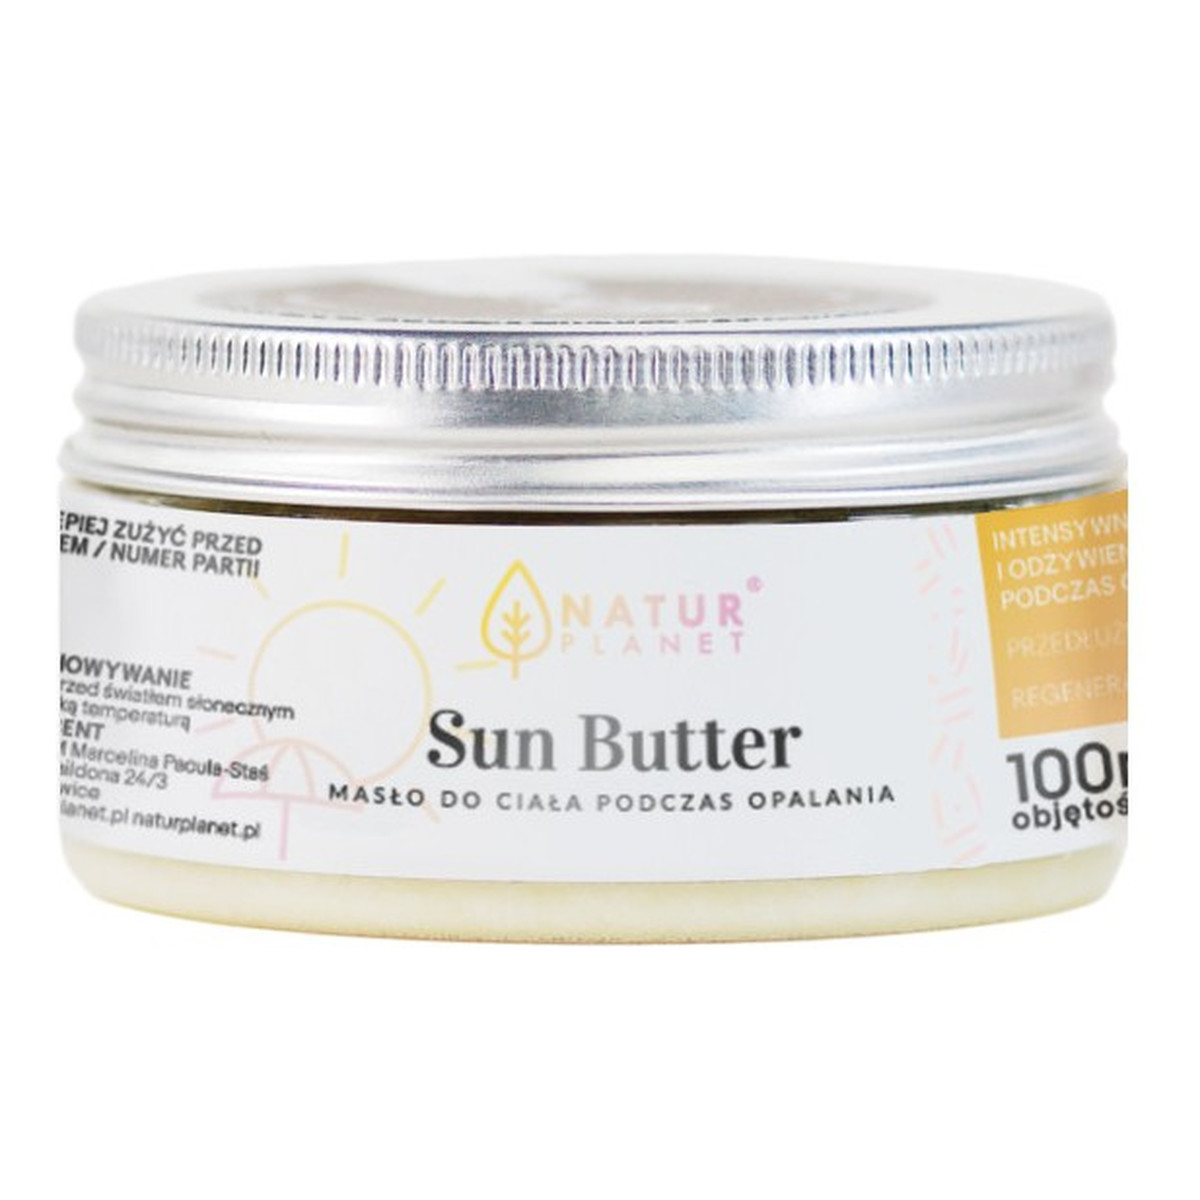 Natur Planet Sun Butter masło do ciała podczas opalania 100 ml 100ml